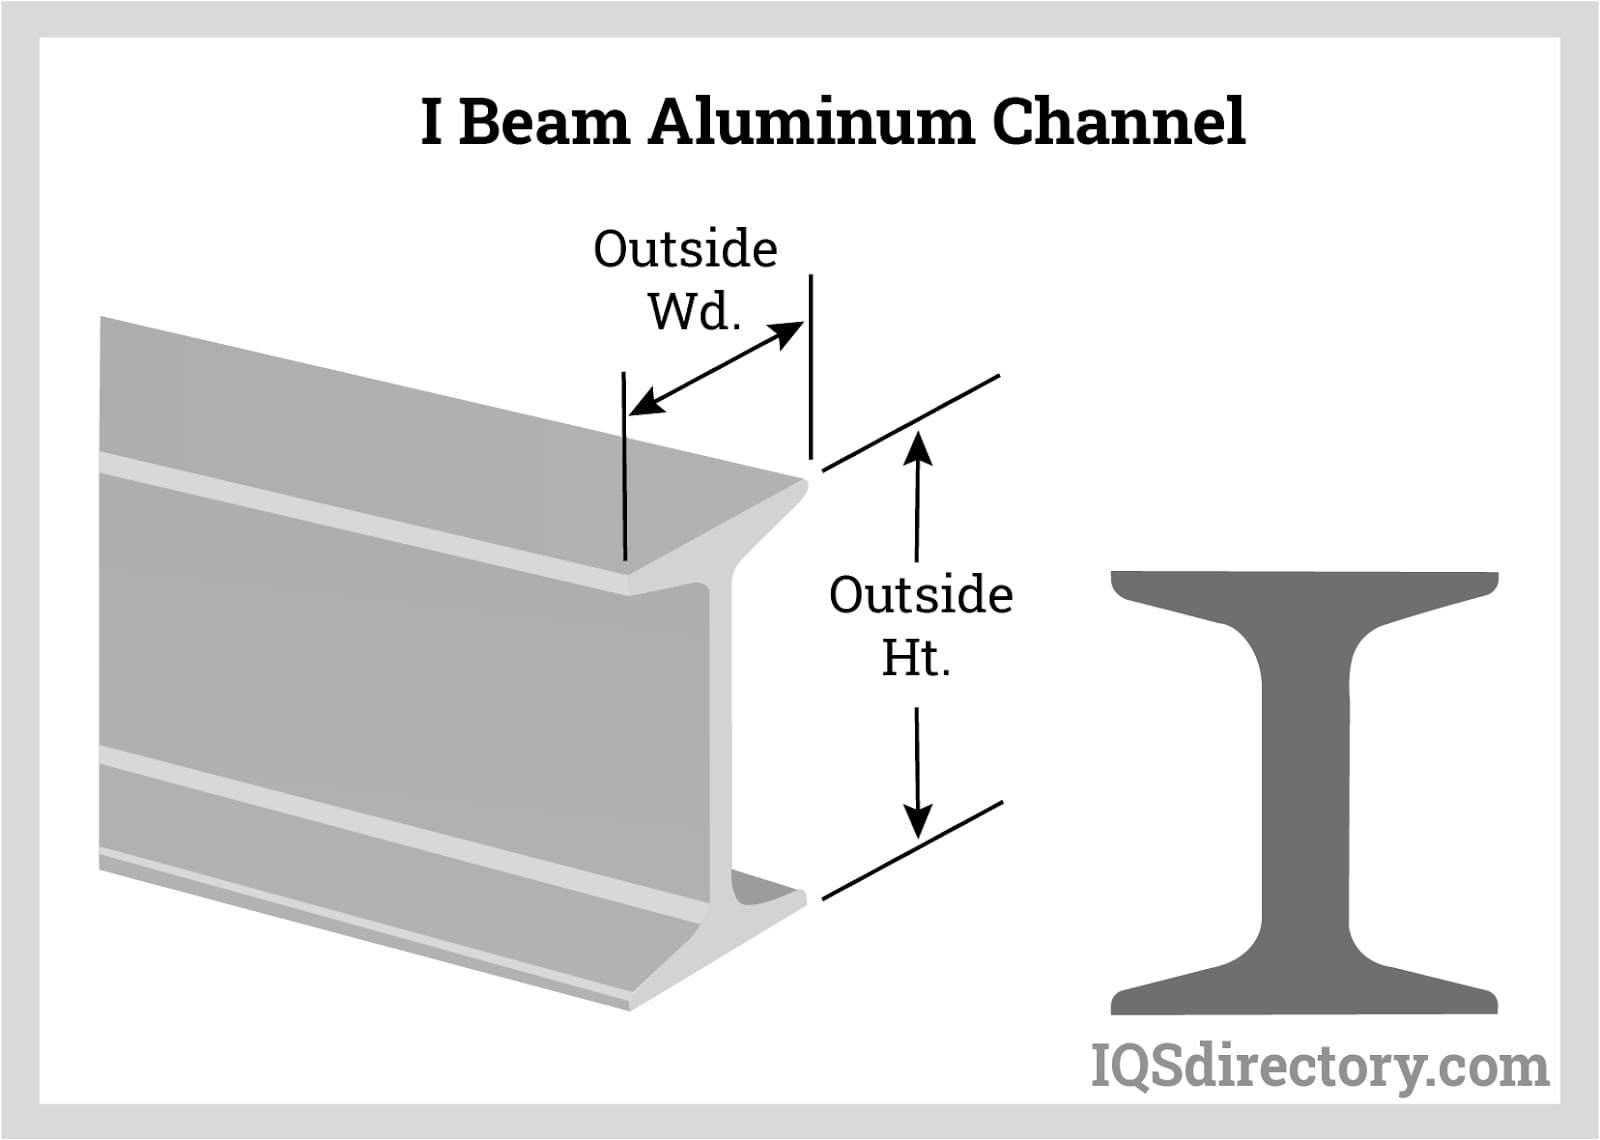 I Beam Aluminum Channel